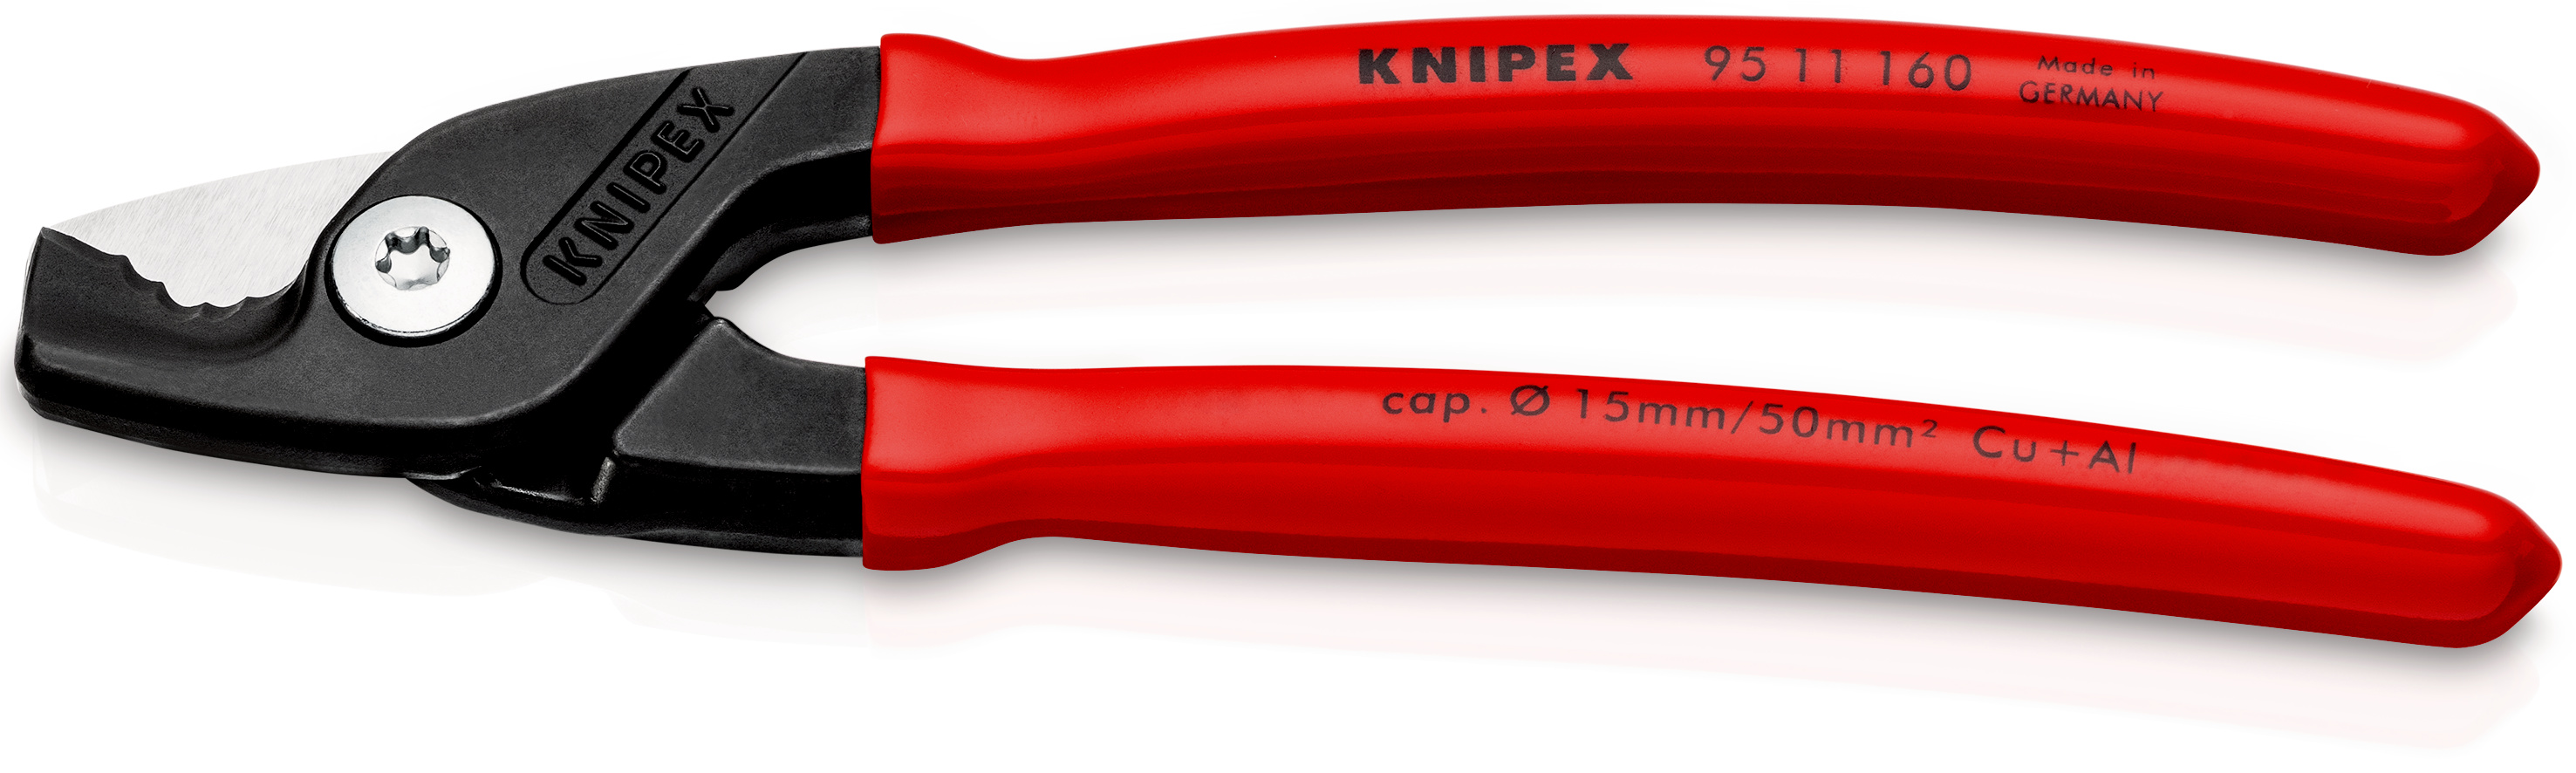 KNIPEX KNIPEX(クニペックス)9512-500 ケーブルカッター - 切削、切断